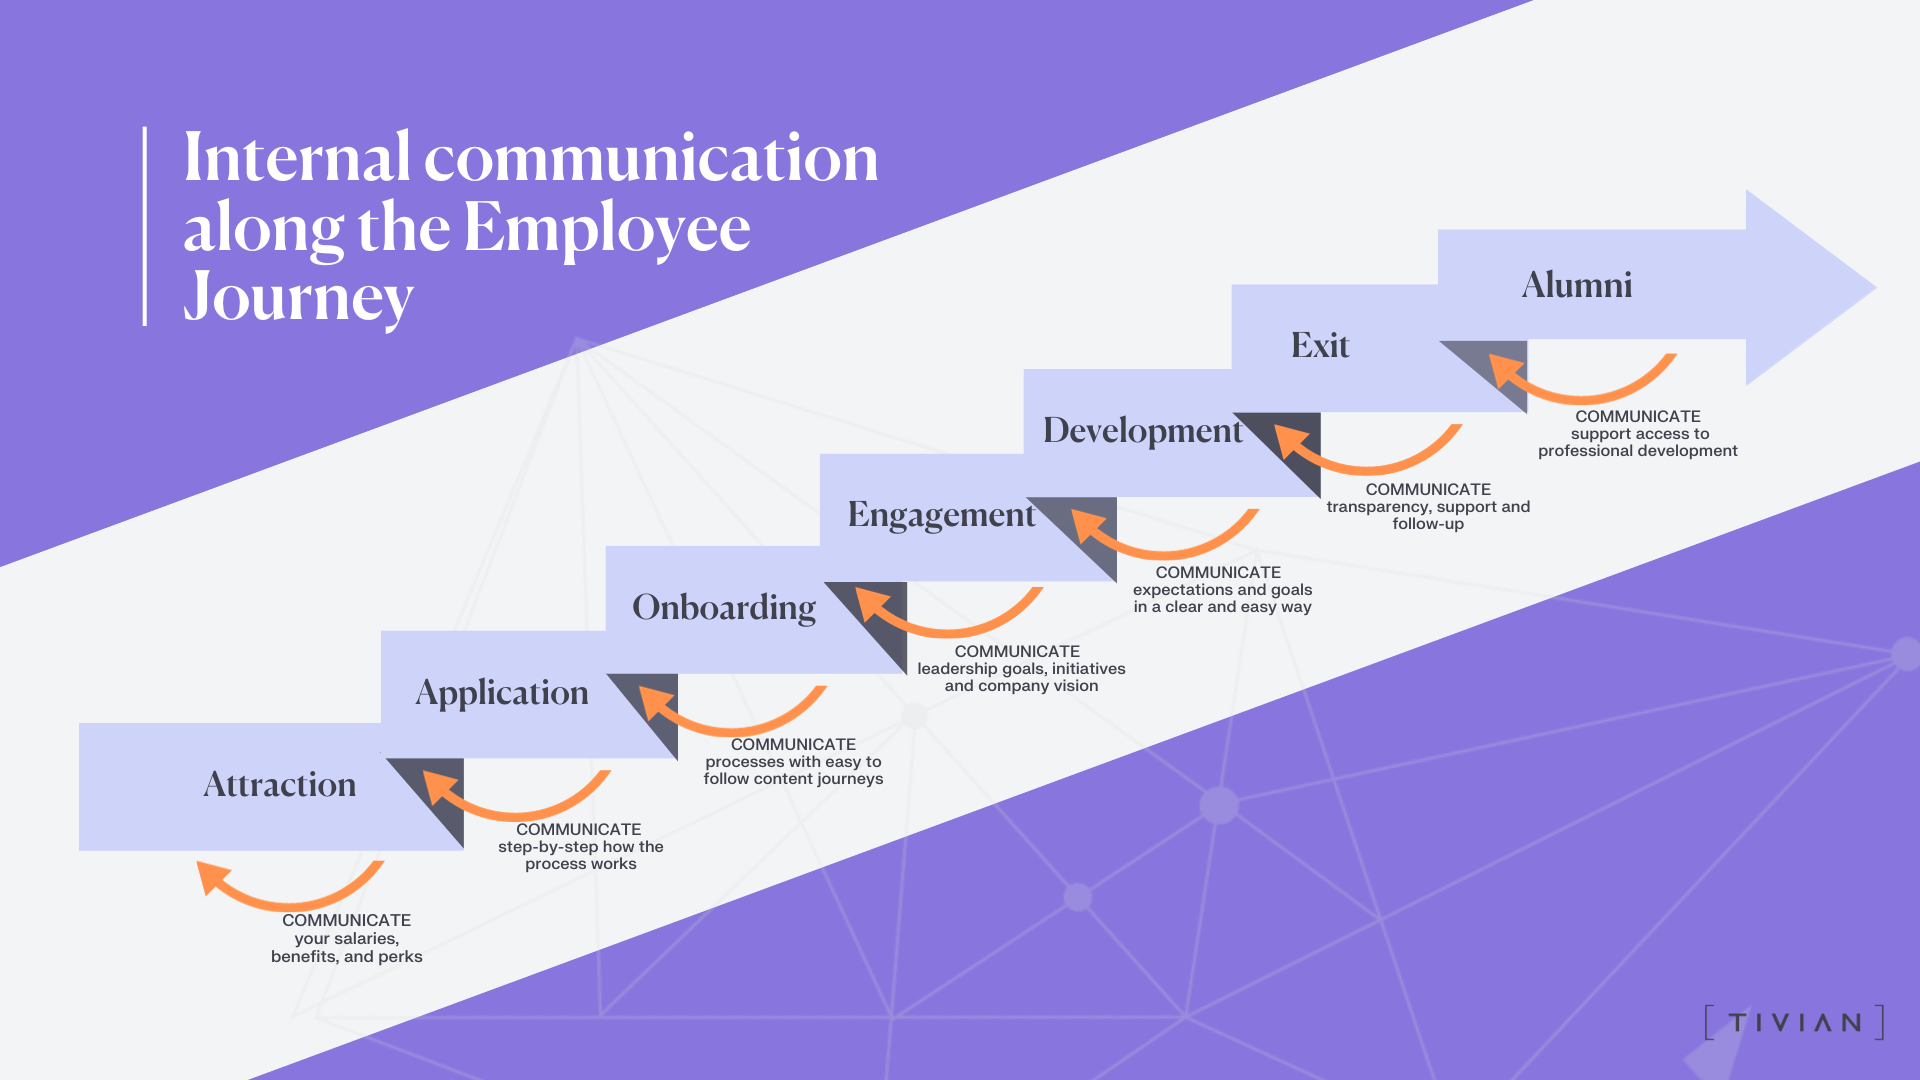 internal communication along the Employee journey